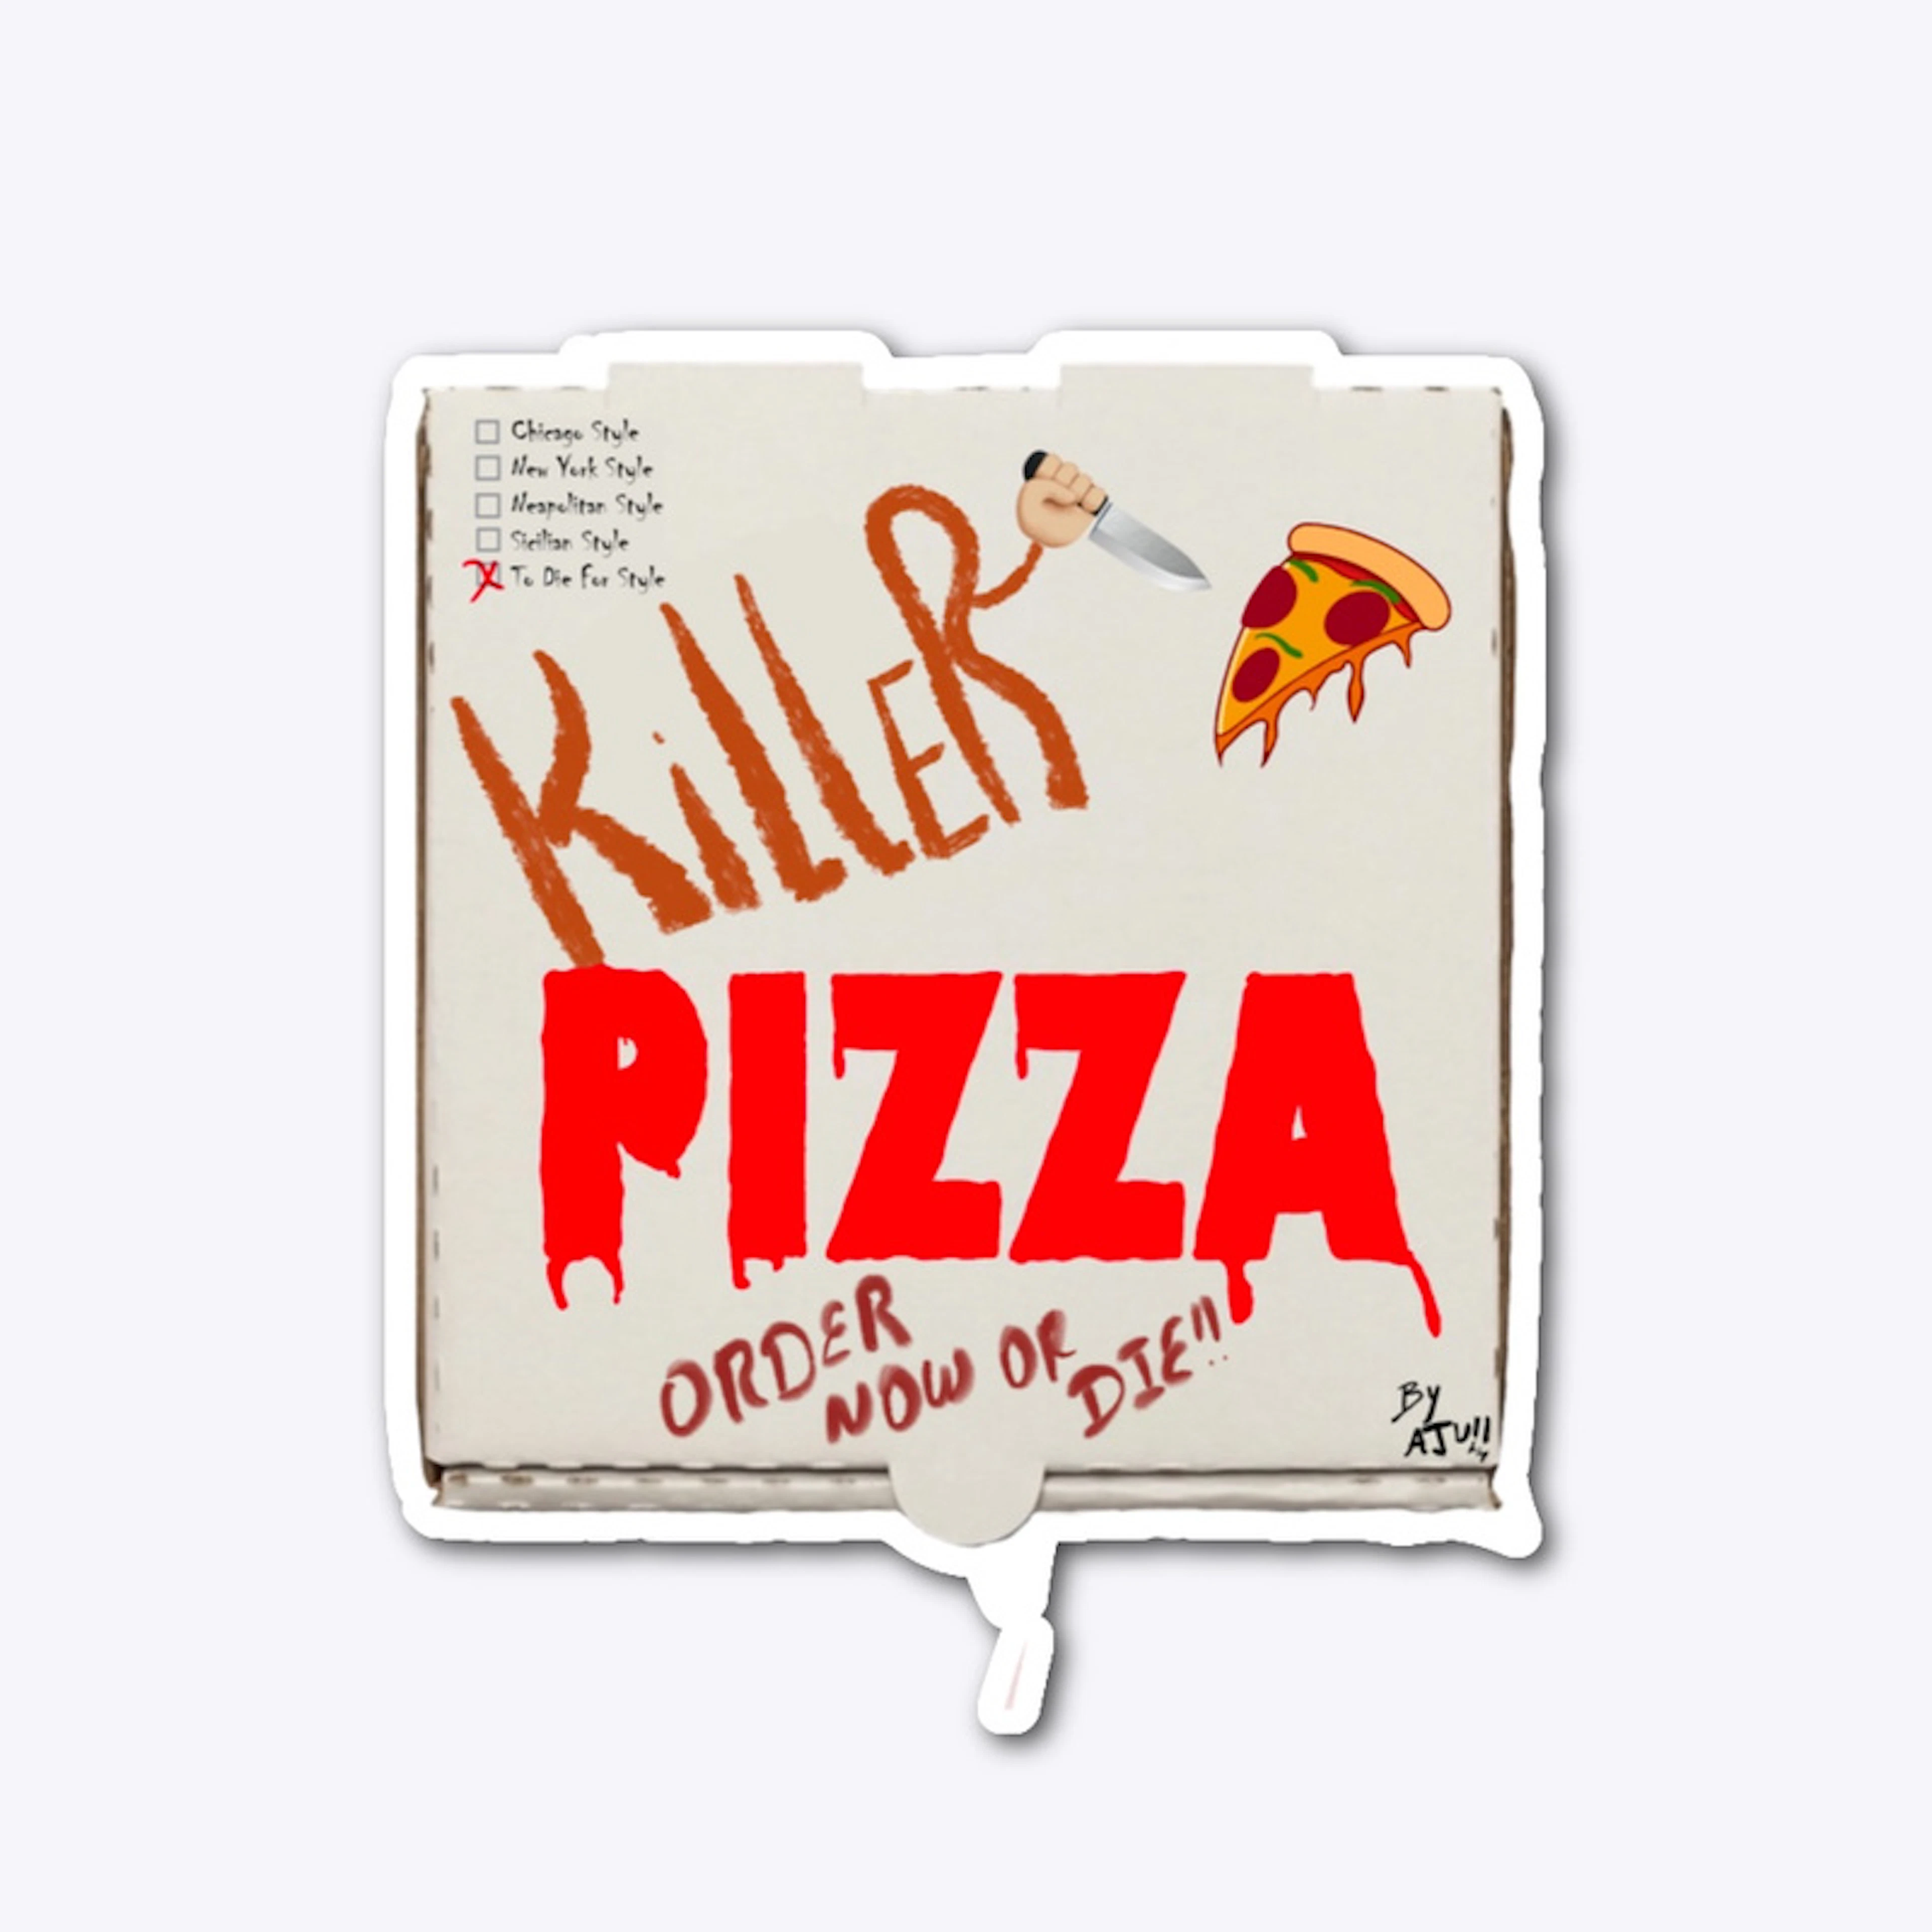 Killer Pizza - Horror Collection